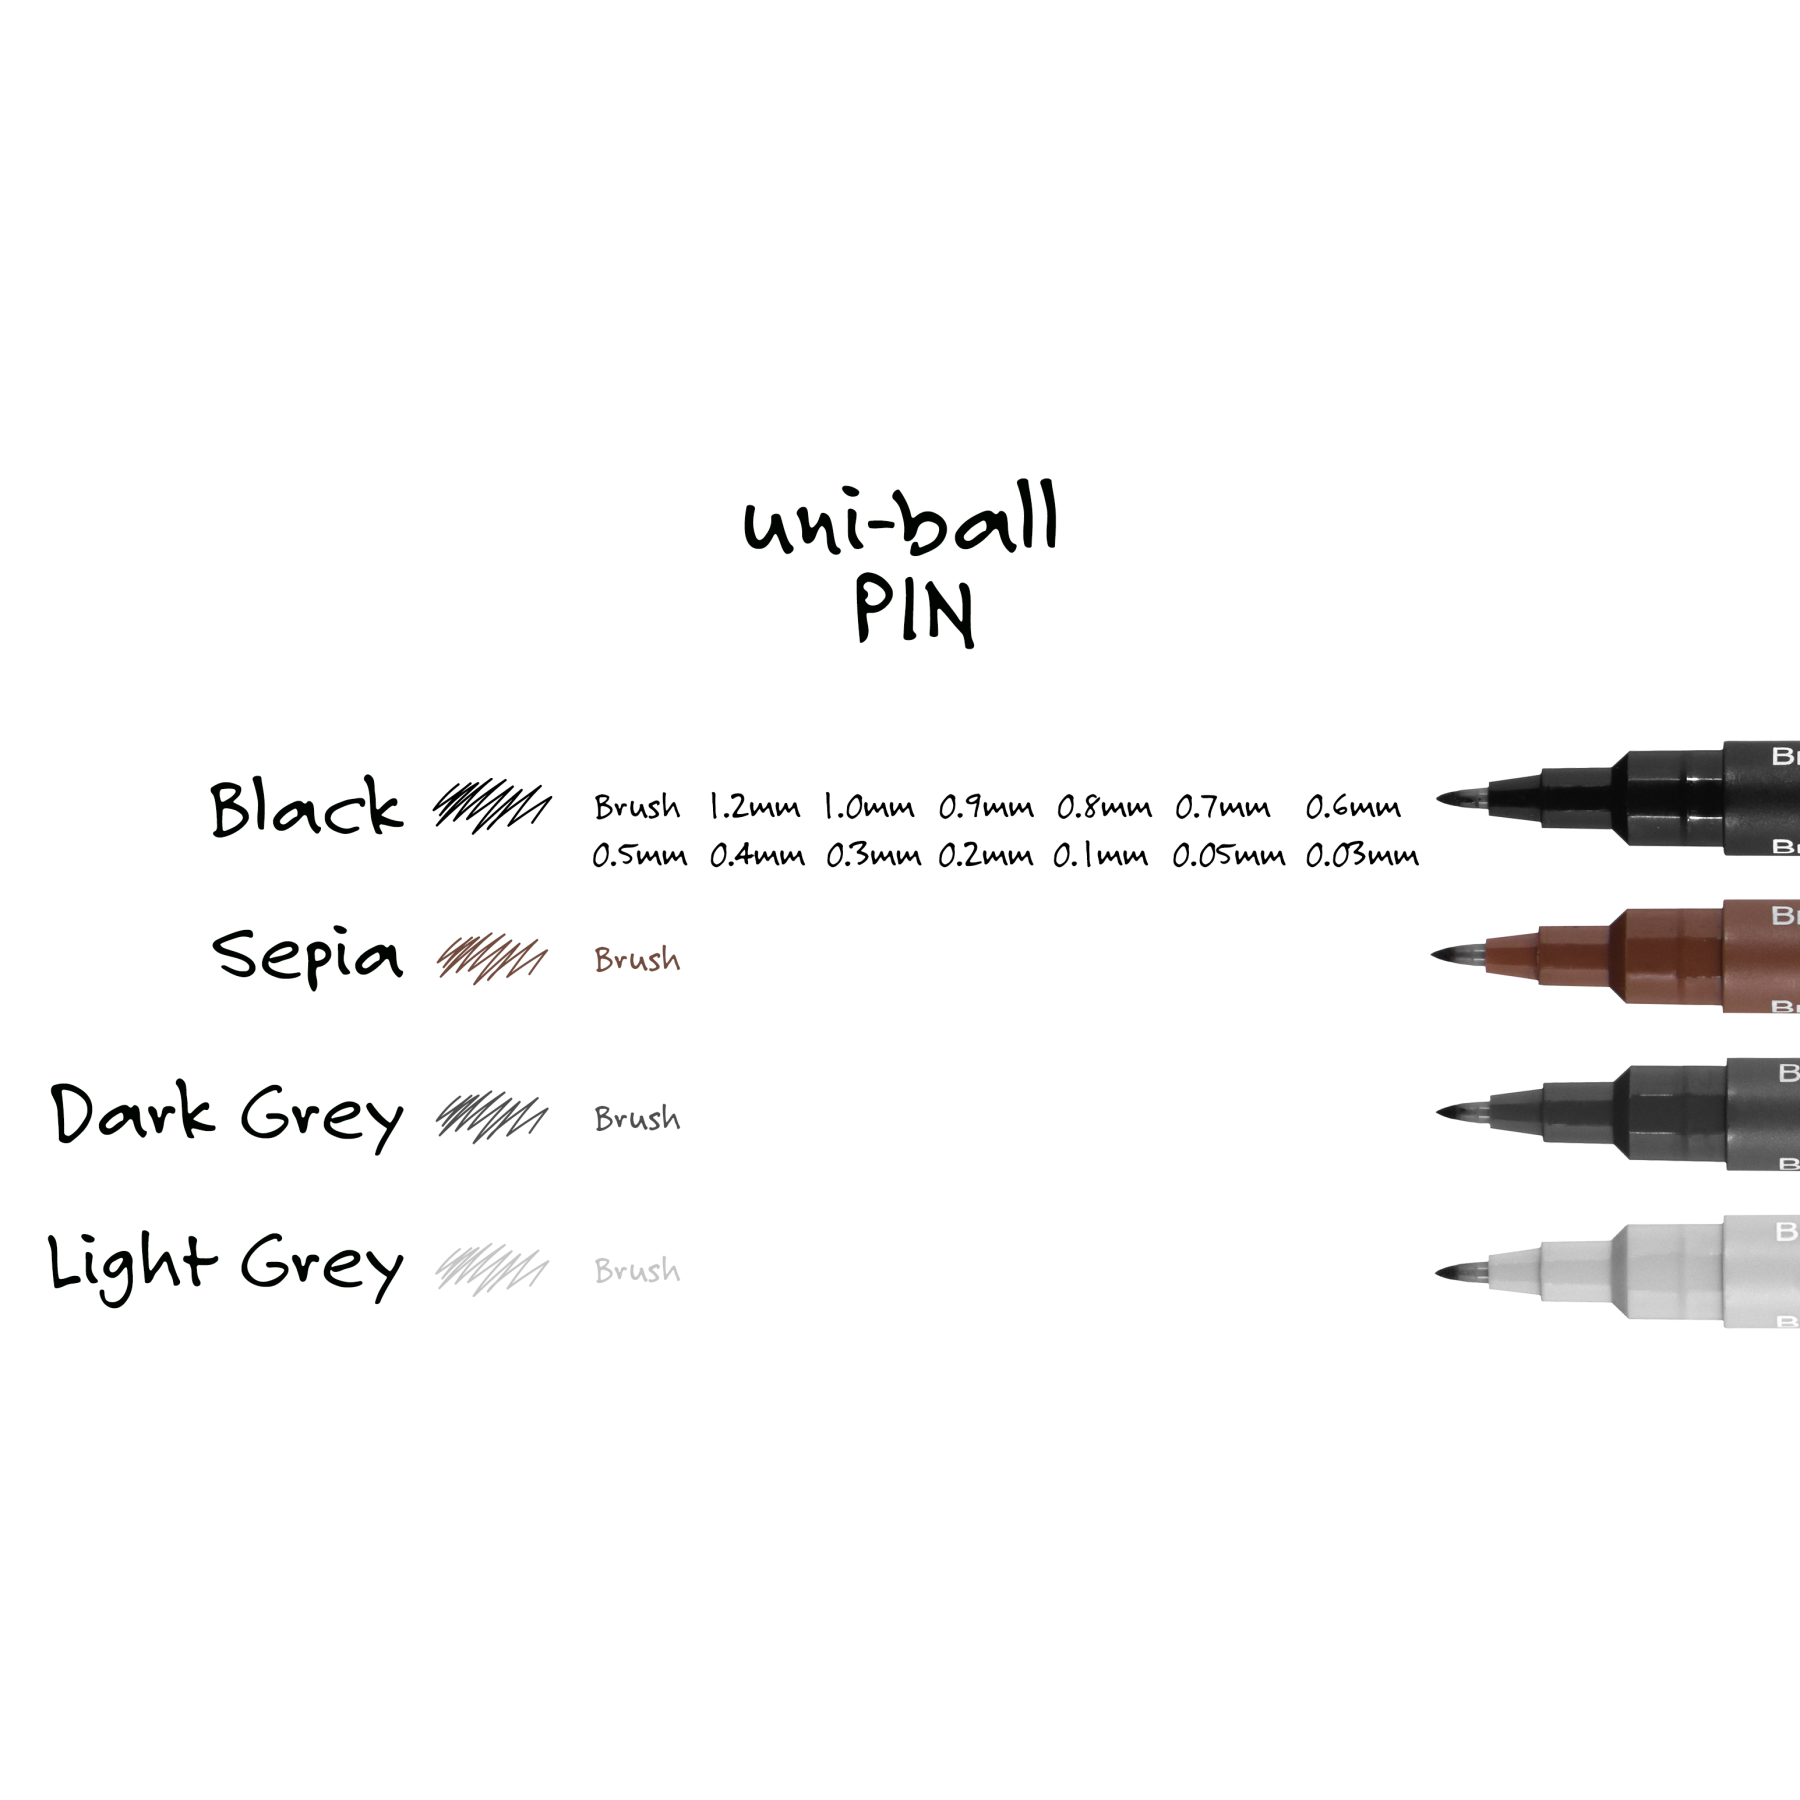 uni® Pin, Fine Line Drawing Pen (0.6mm)